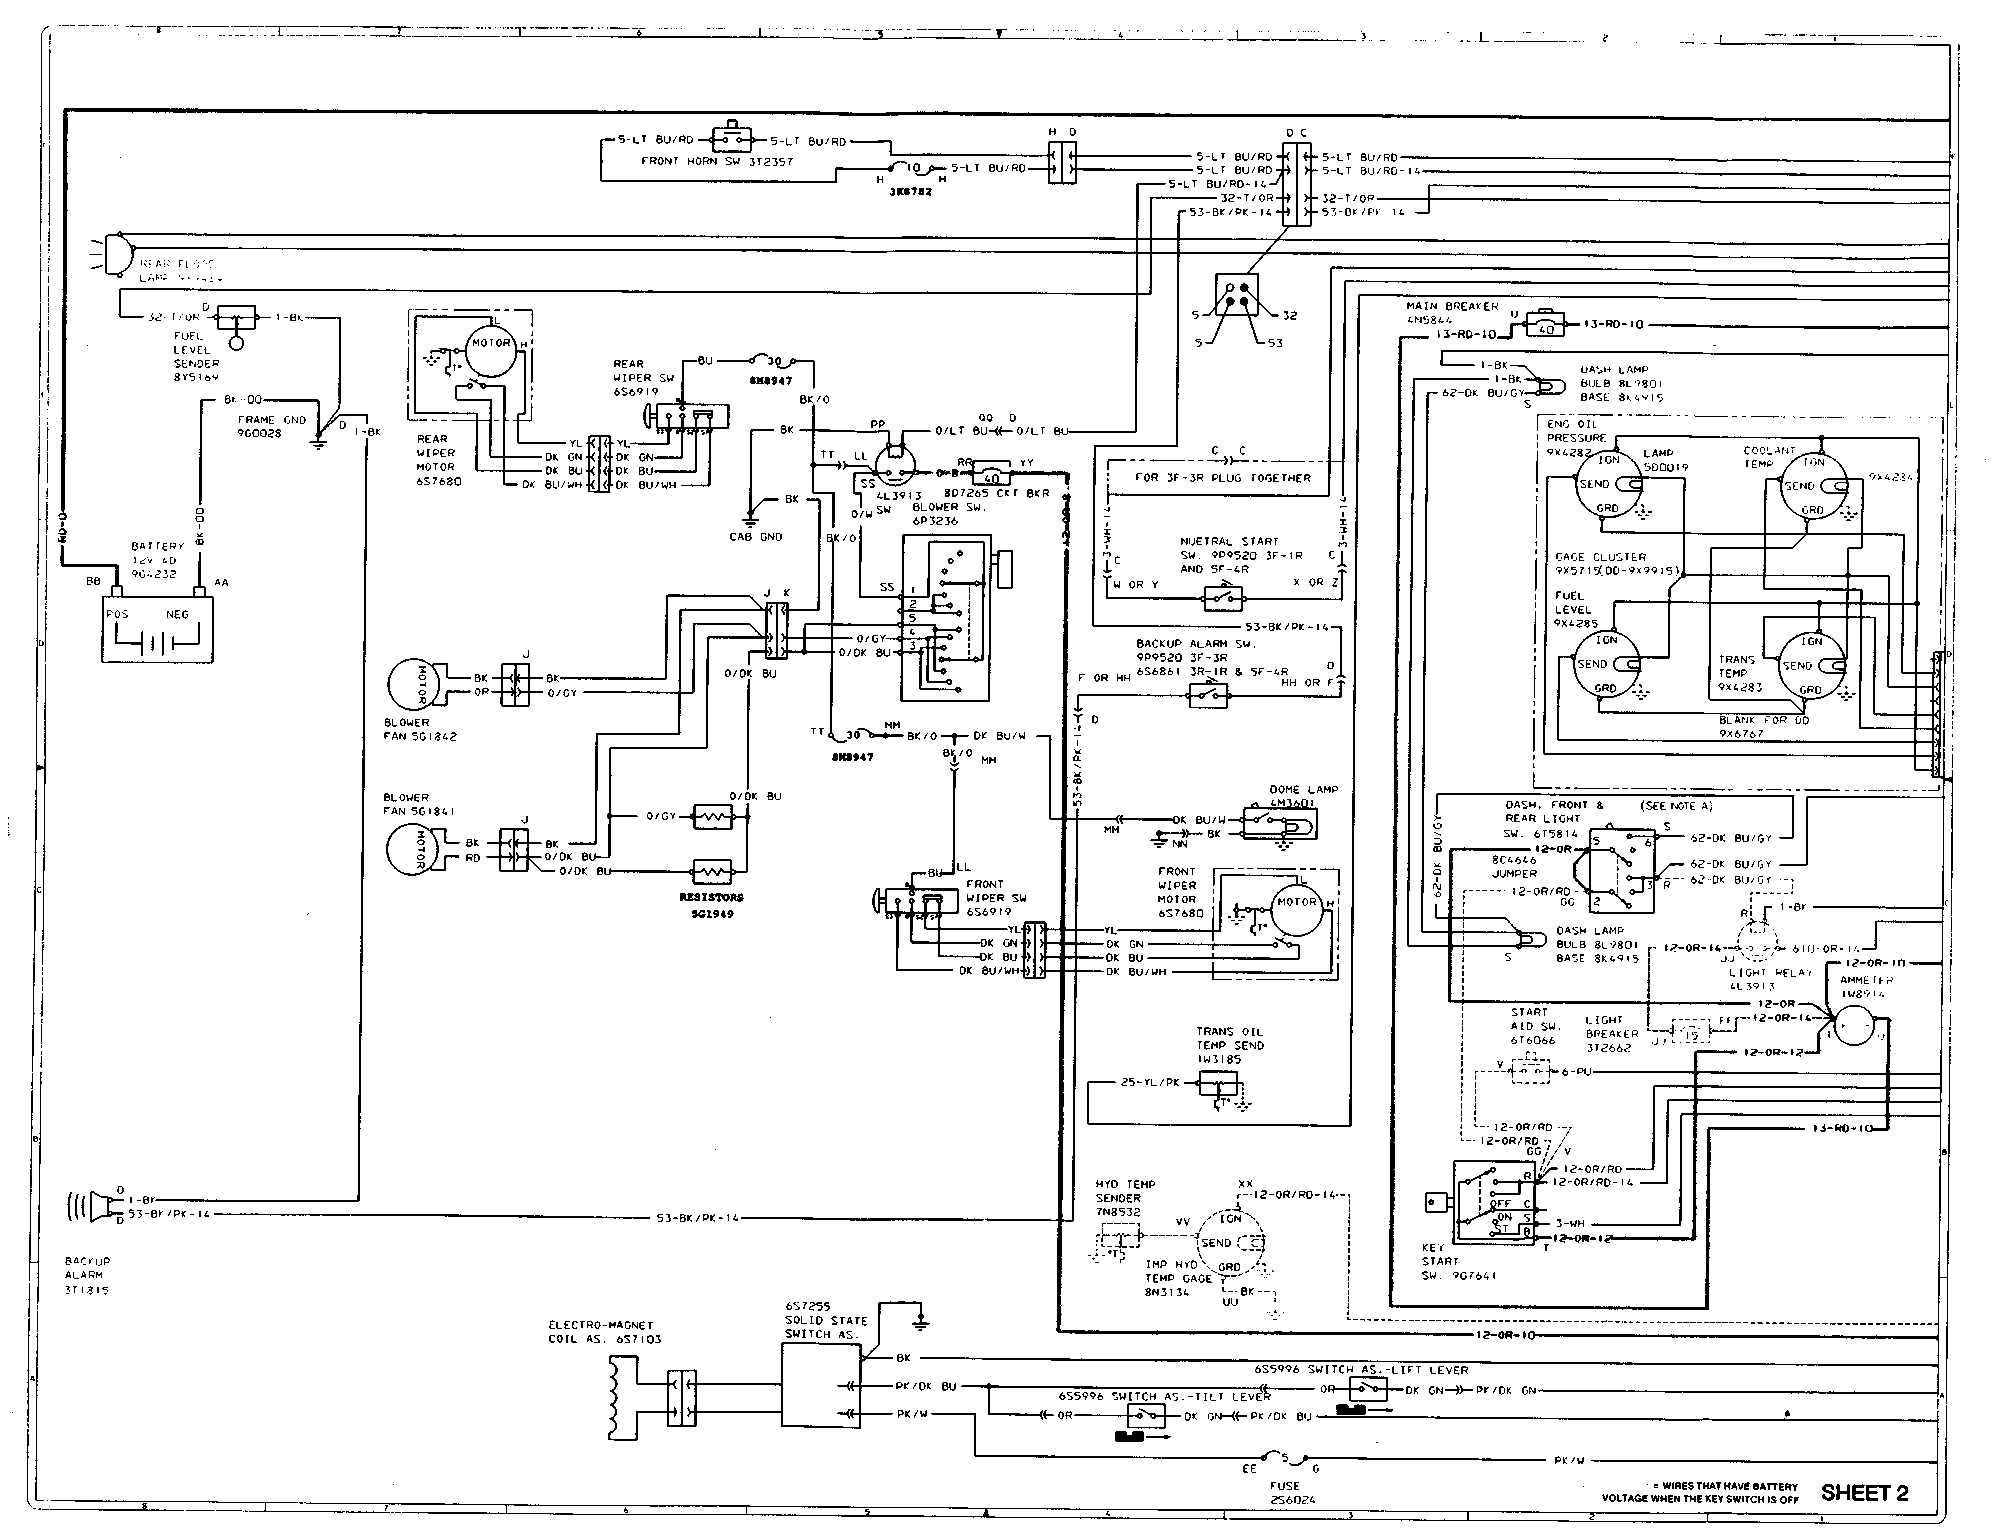 Wiring Diagram For Cat D5c